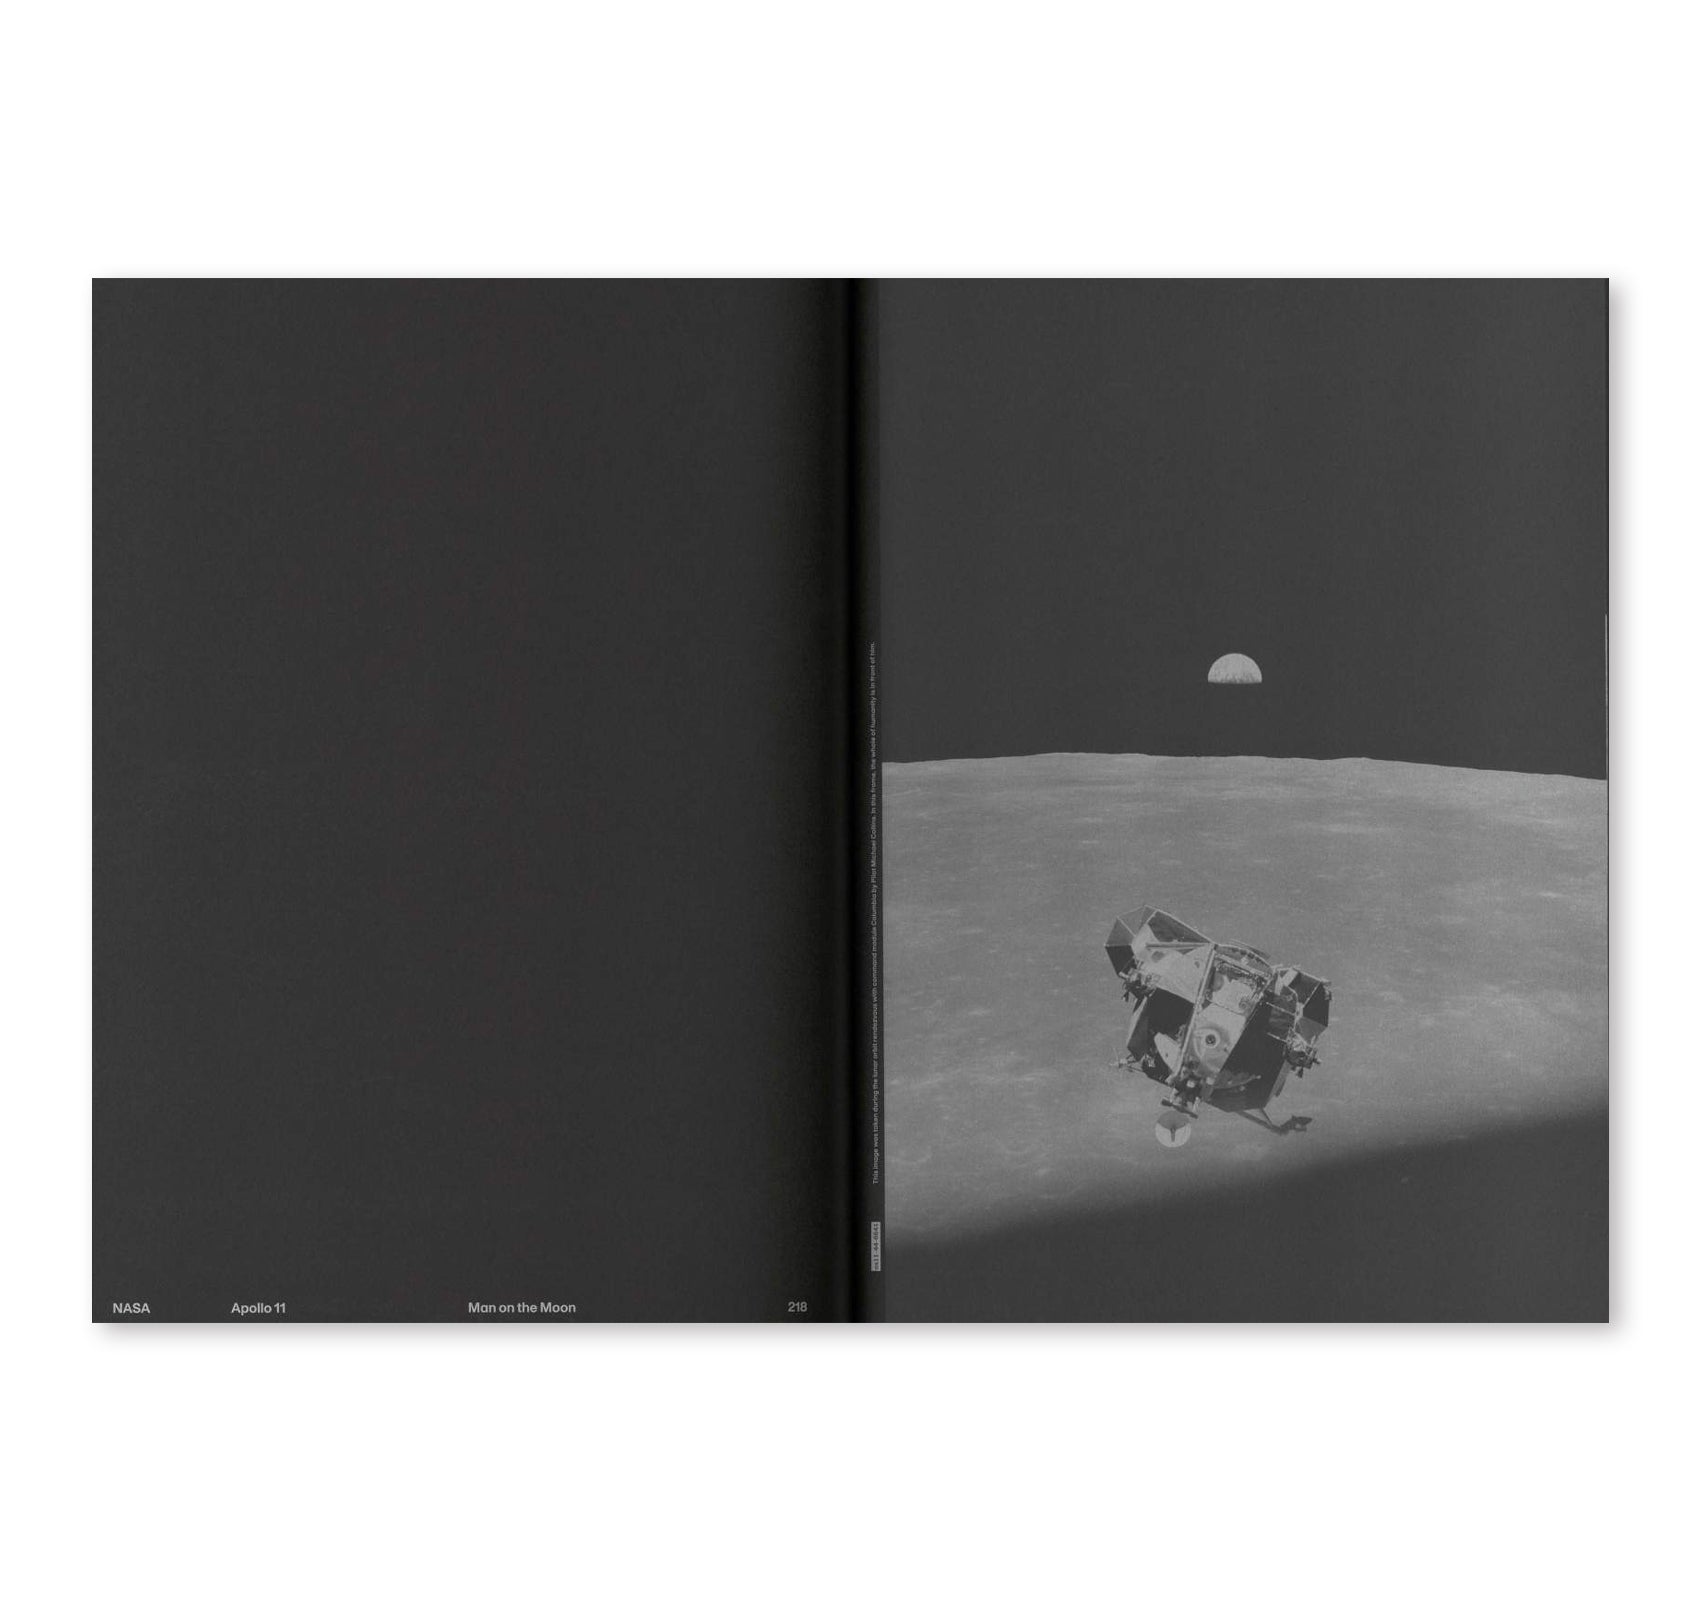 NASA APOLLO 11 – MAN ON THE MOON